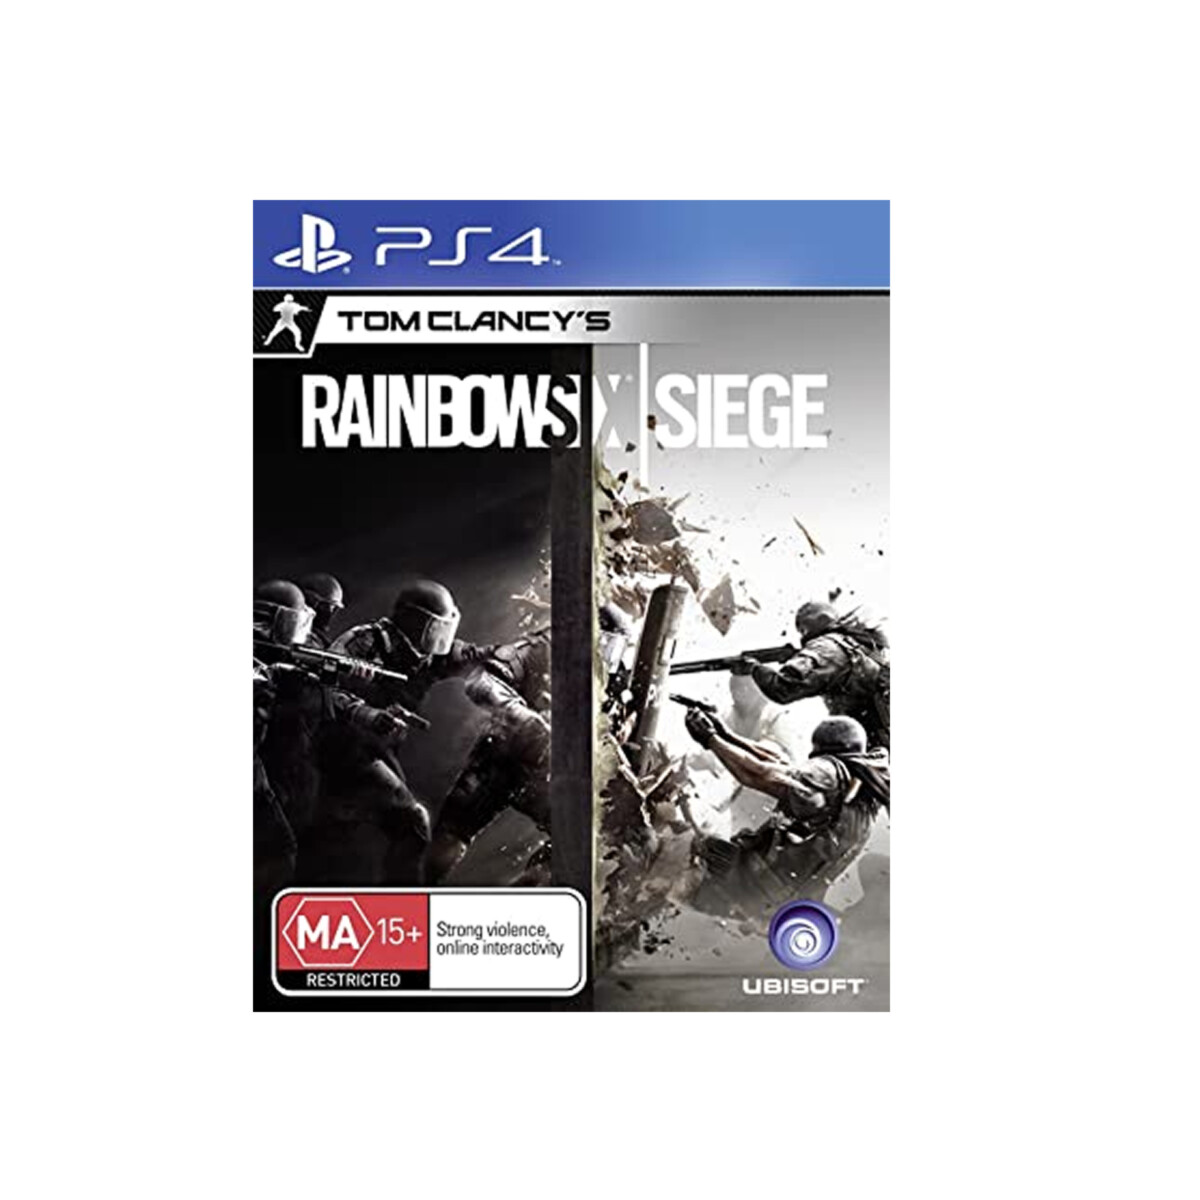 PS4 Rainbow Six Siege 